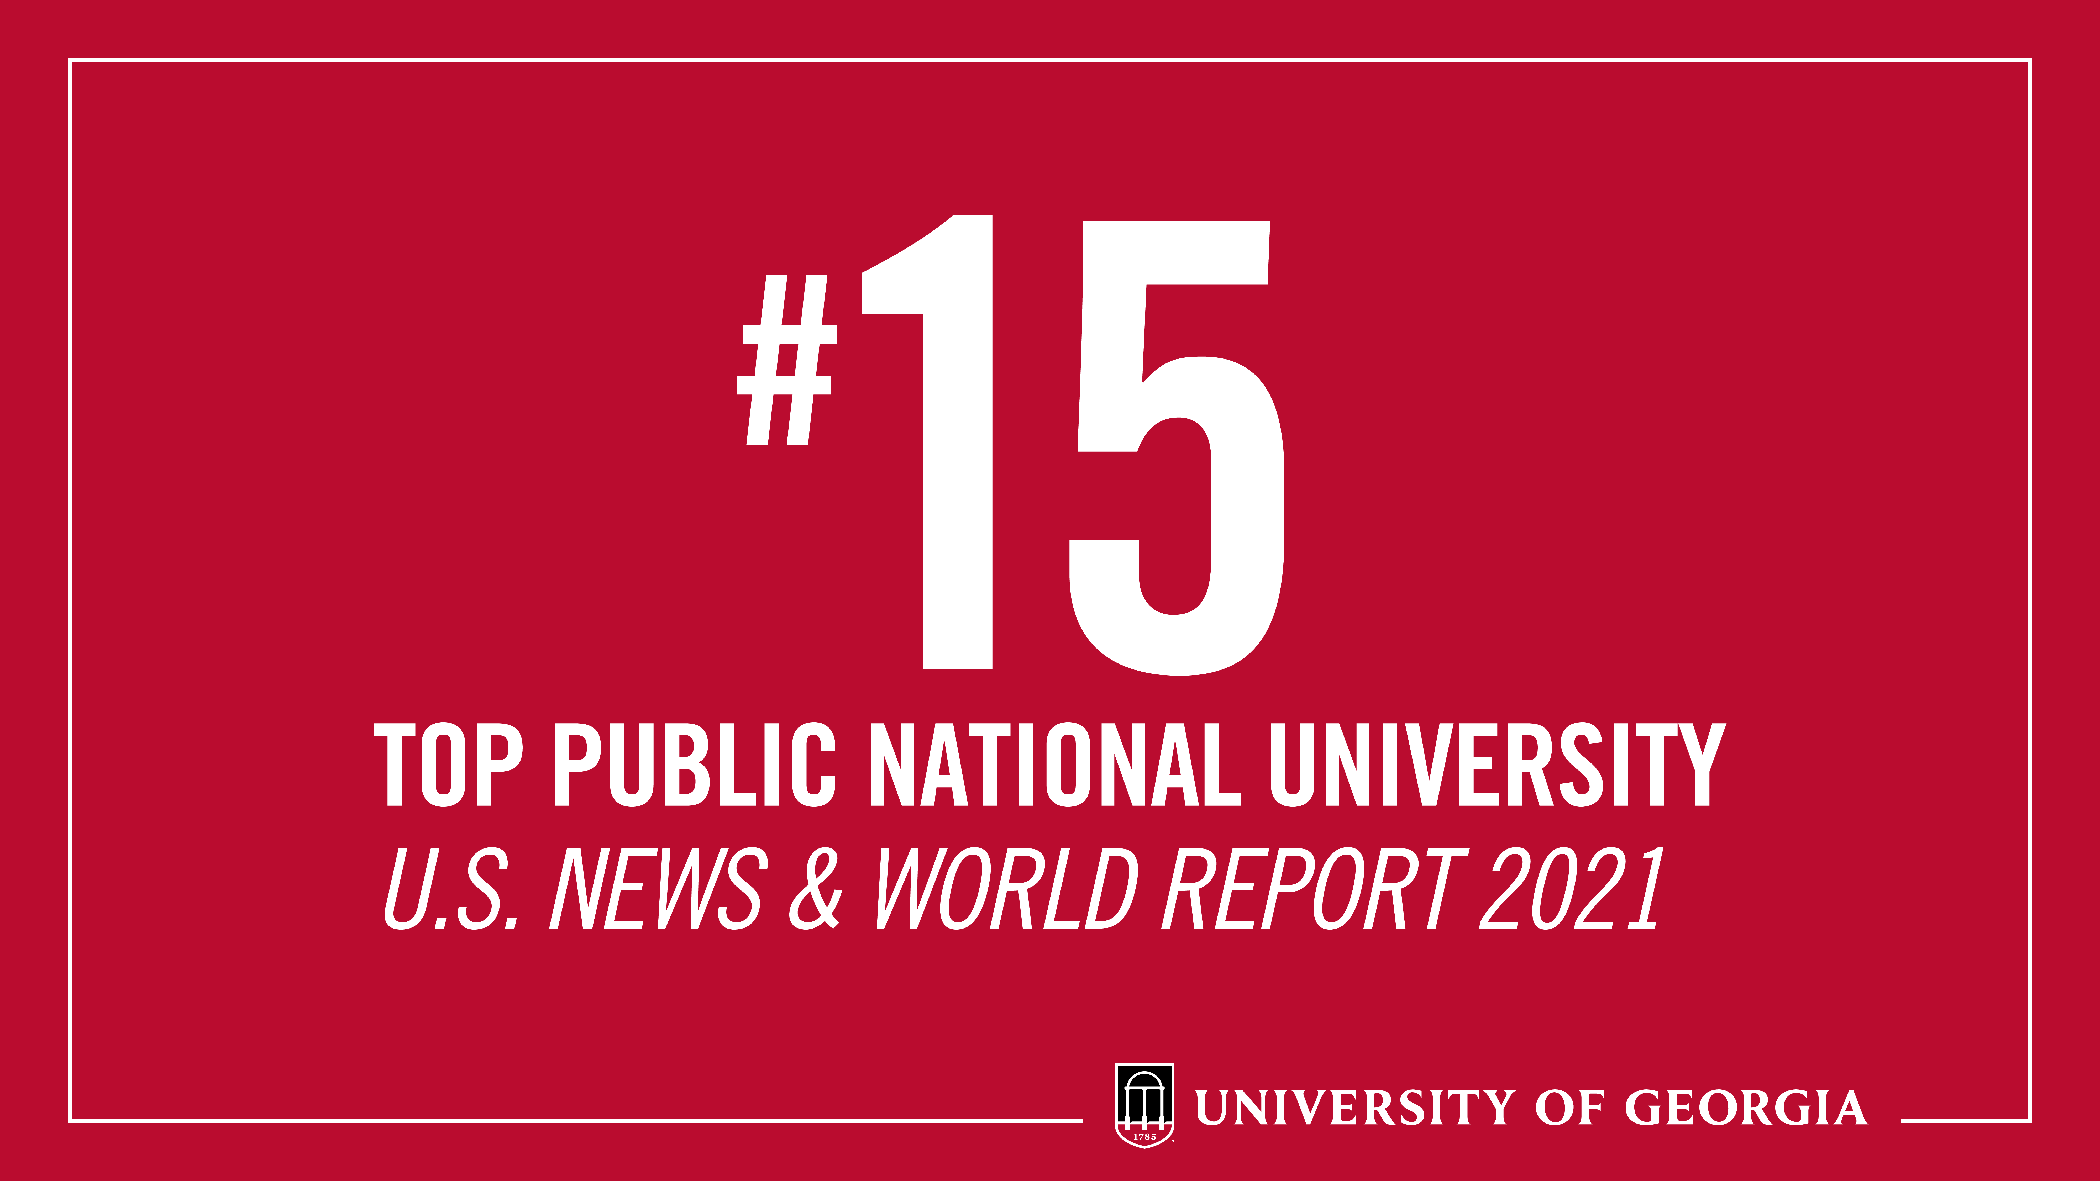 #15 USNWR ranking in 2020